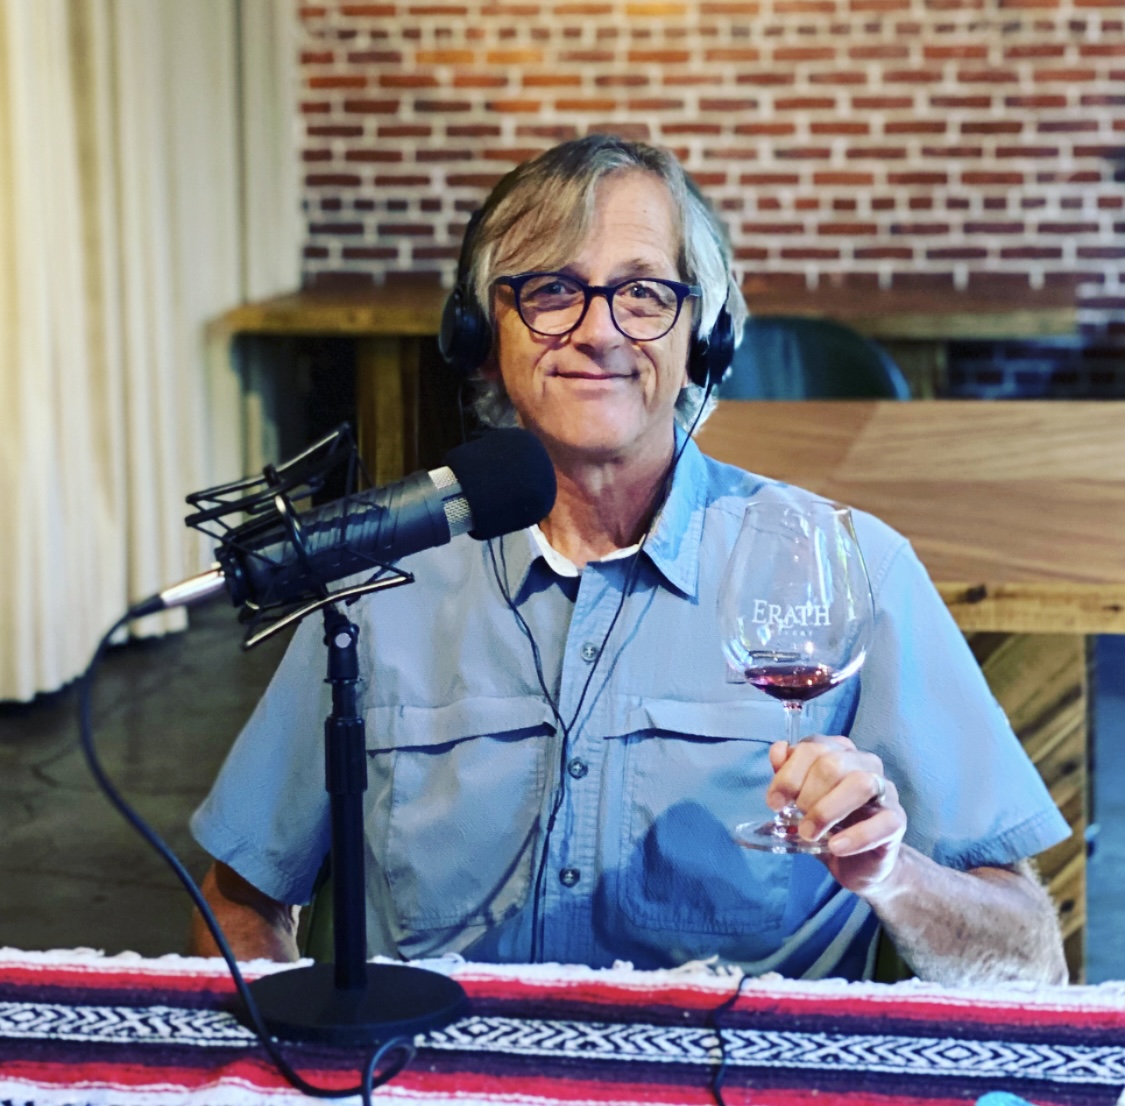 Gary Horner Head Winemaker Erath Winery Culinary Treasure Podcast Episode 92 by Steven Shomler FINAL